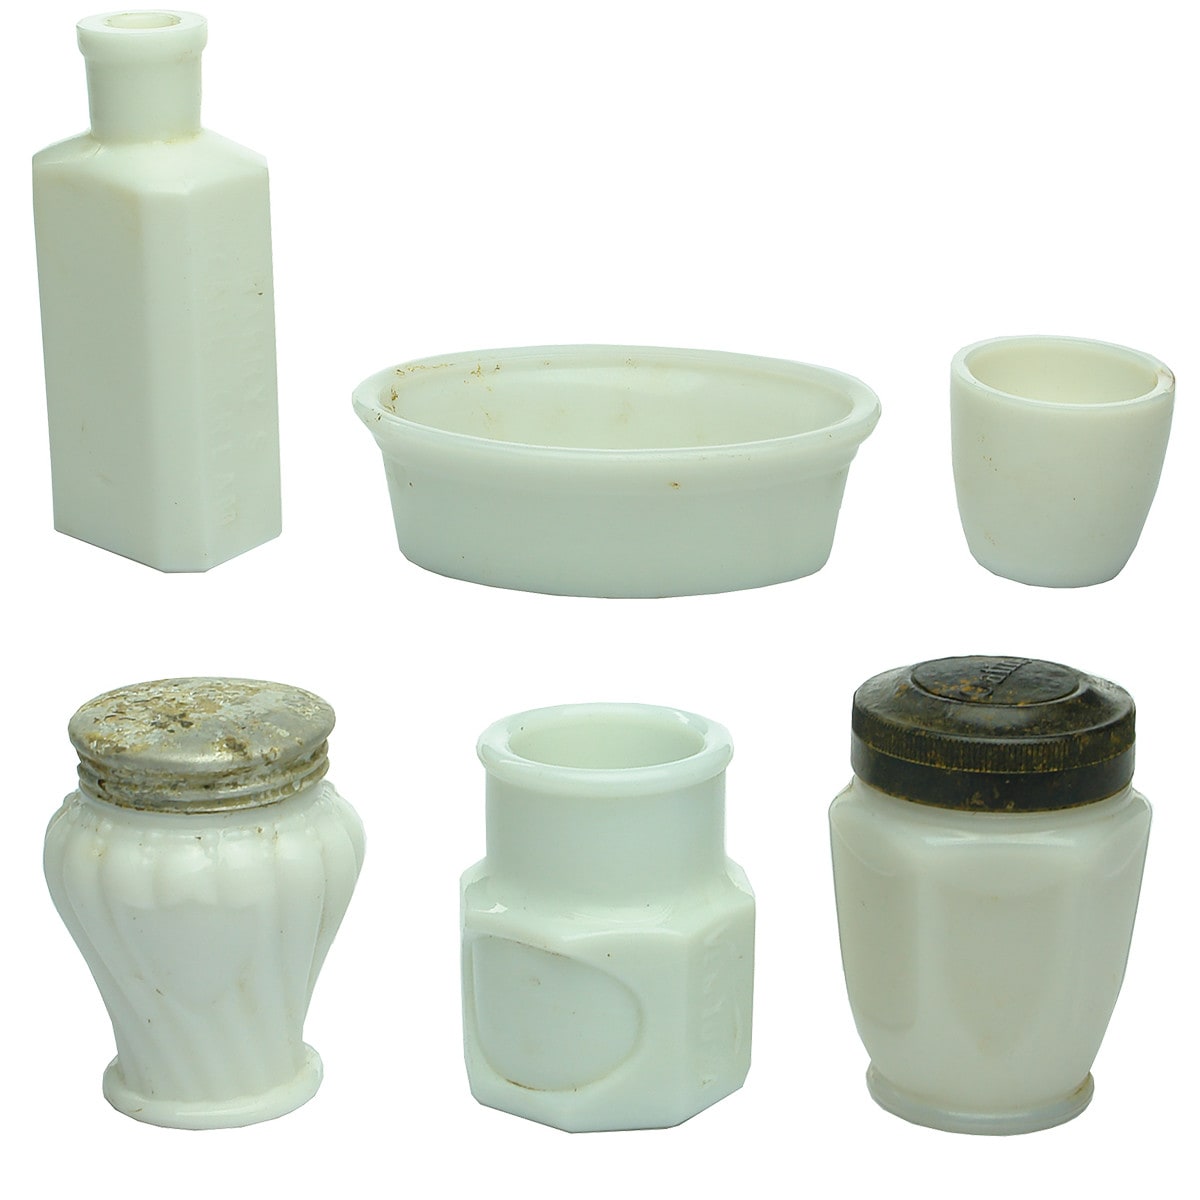 6 Milk Glass items: Barry's Pearl Cream; W. T. & Co dish; Egg Cup? Ornate cosmetic jar with aluminium cap; Octagonal Ven-Yusa jar; Hexagonal Oatine jar with bakelite cap.